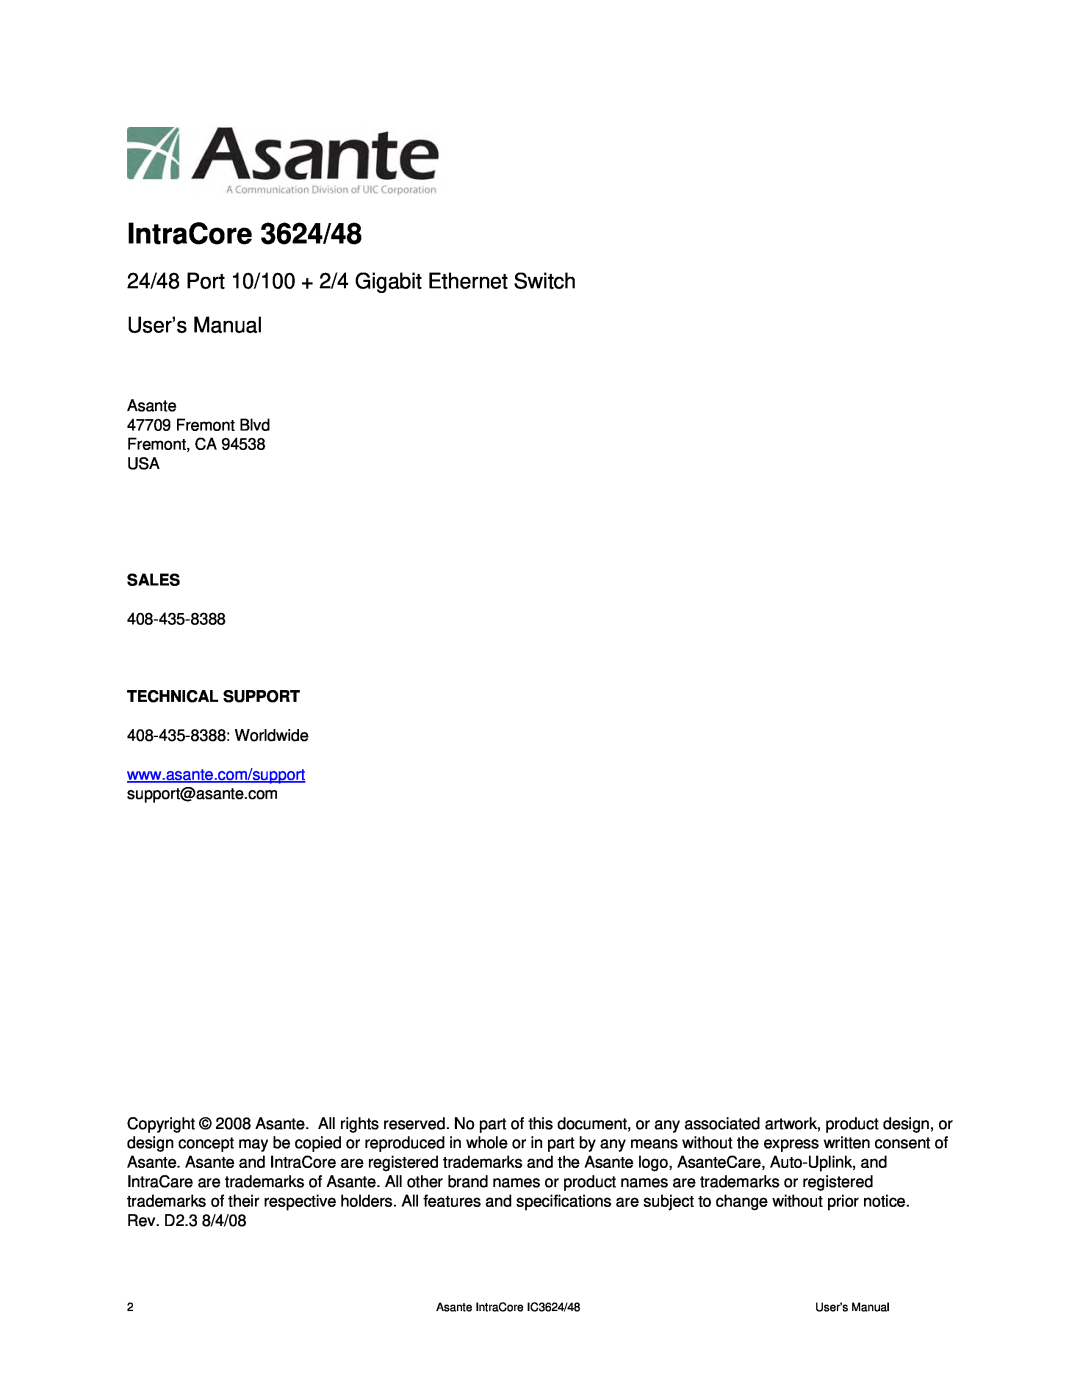 Asante Technologies user manual IntraCore 3624/48, 24/48 Port 10/100 + 2/4 Gigabit Ethernet Switch User’s Manual 